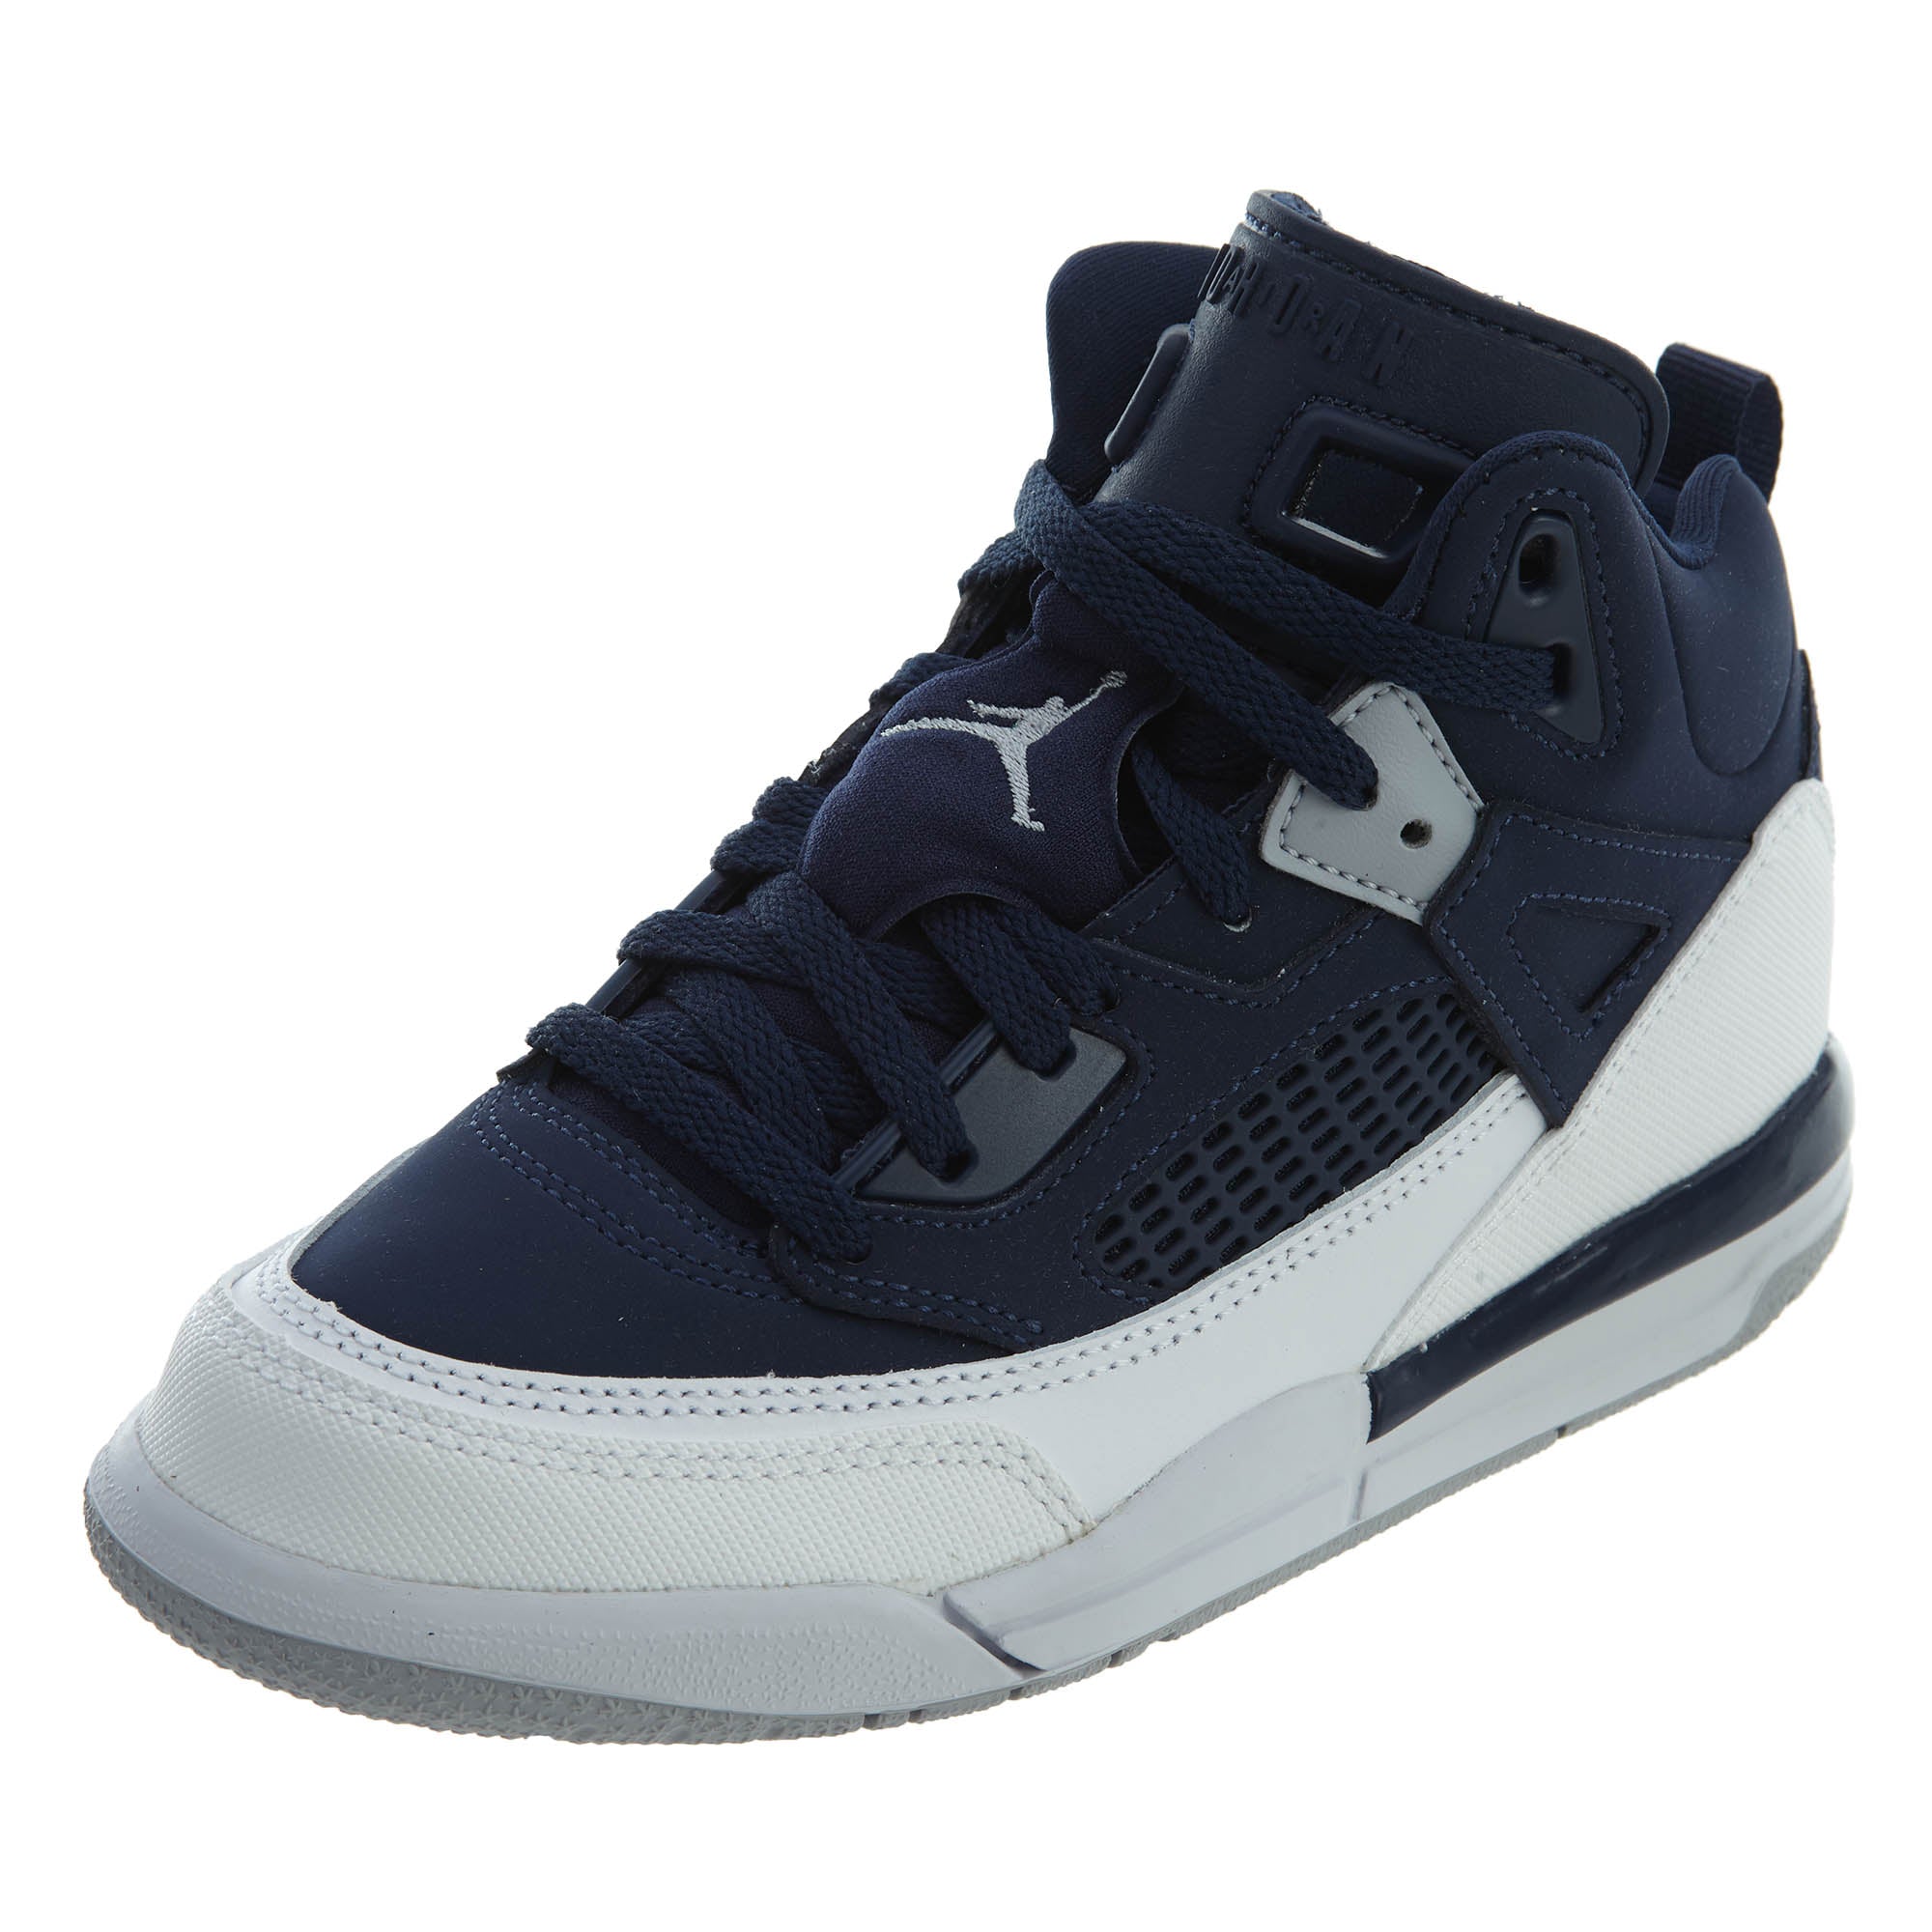 Jordan Spizike Midnight Navy Silver Shoes Boys / Girls Style :317700